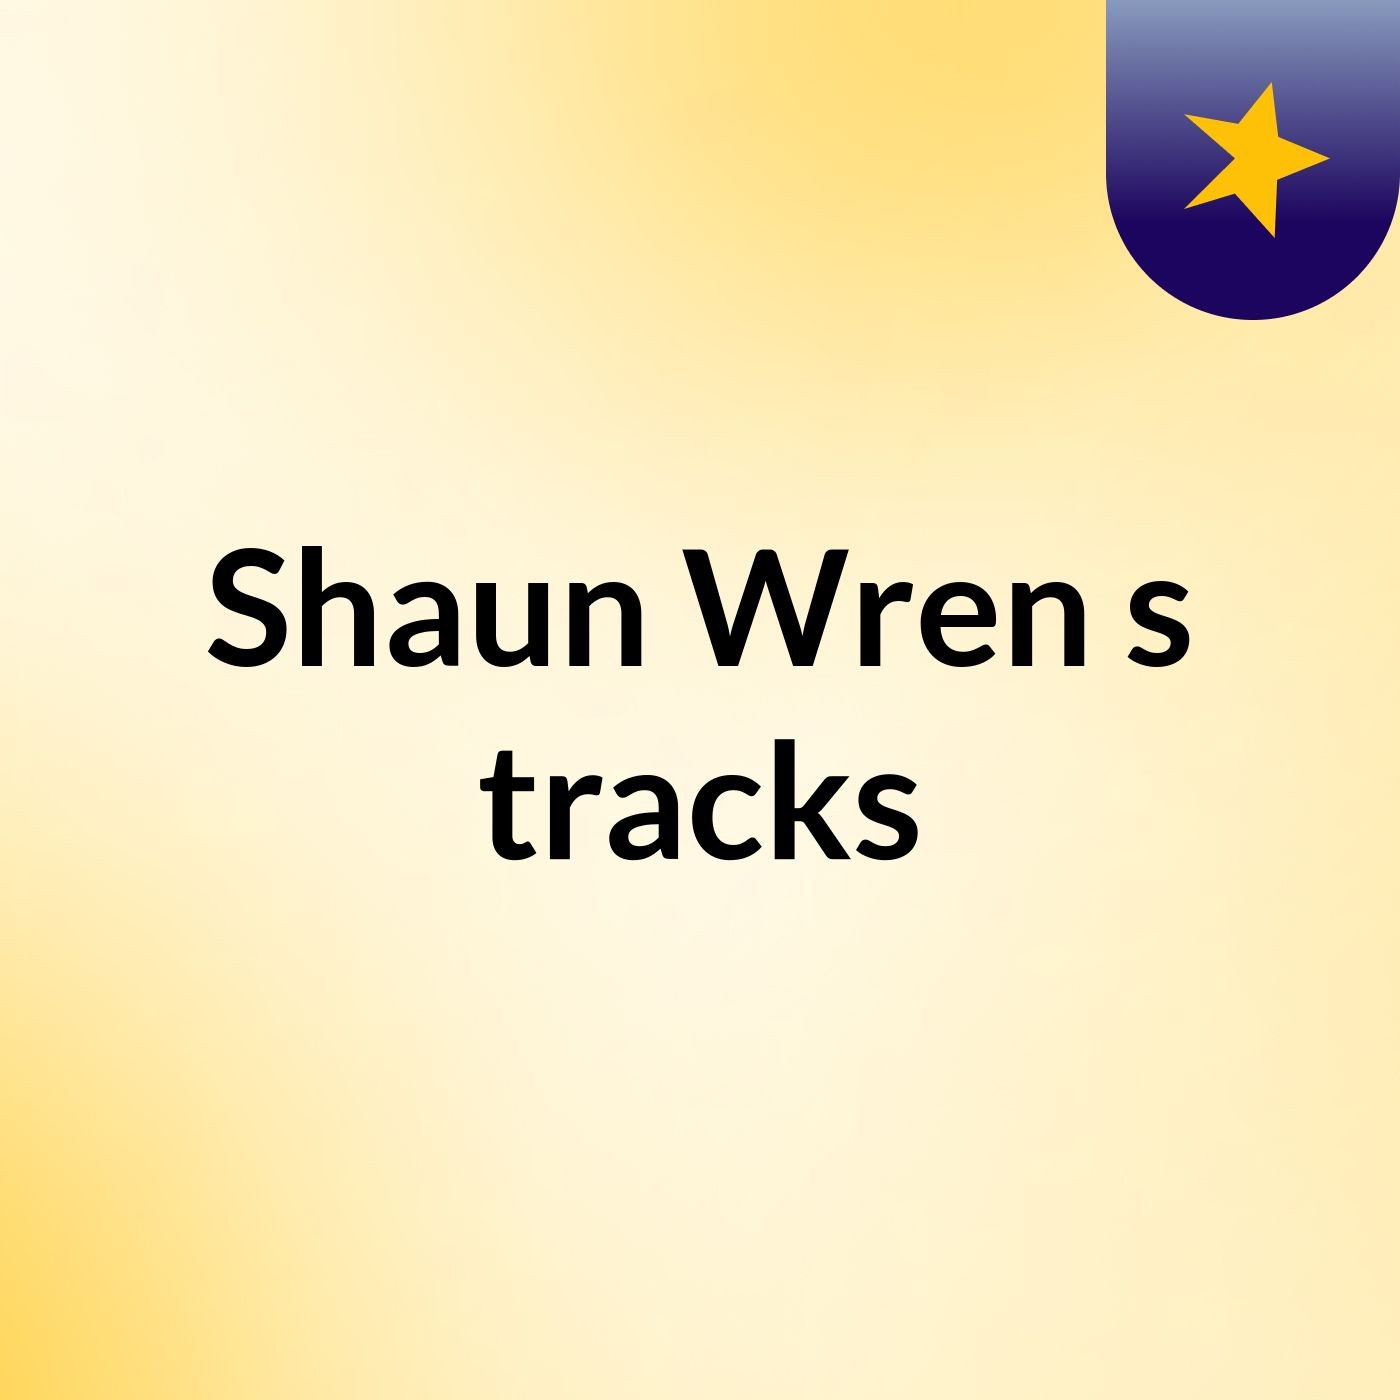 Shaun Wren's tracks